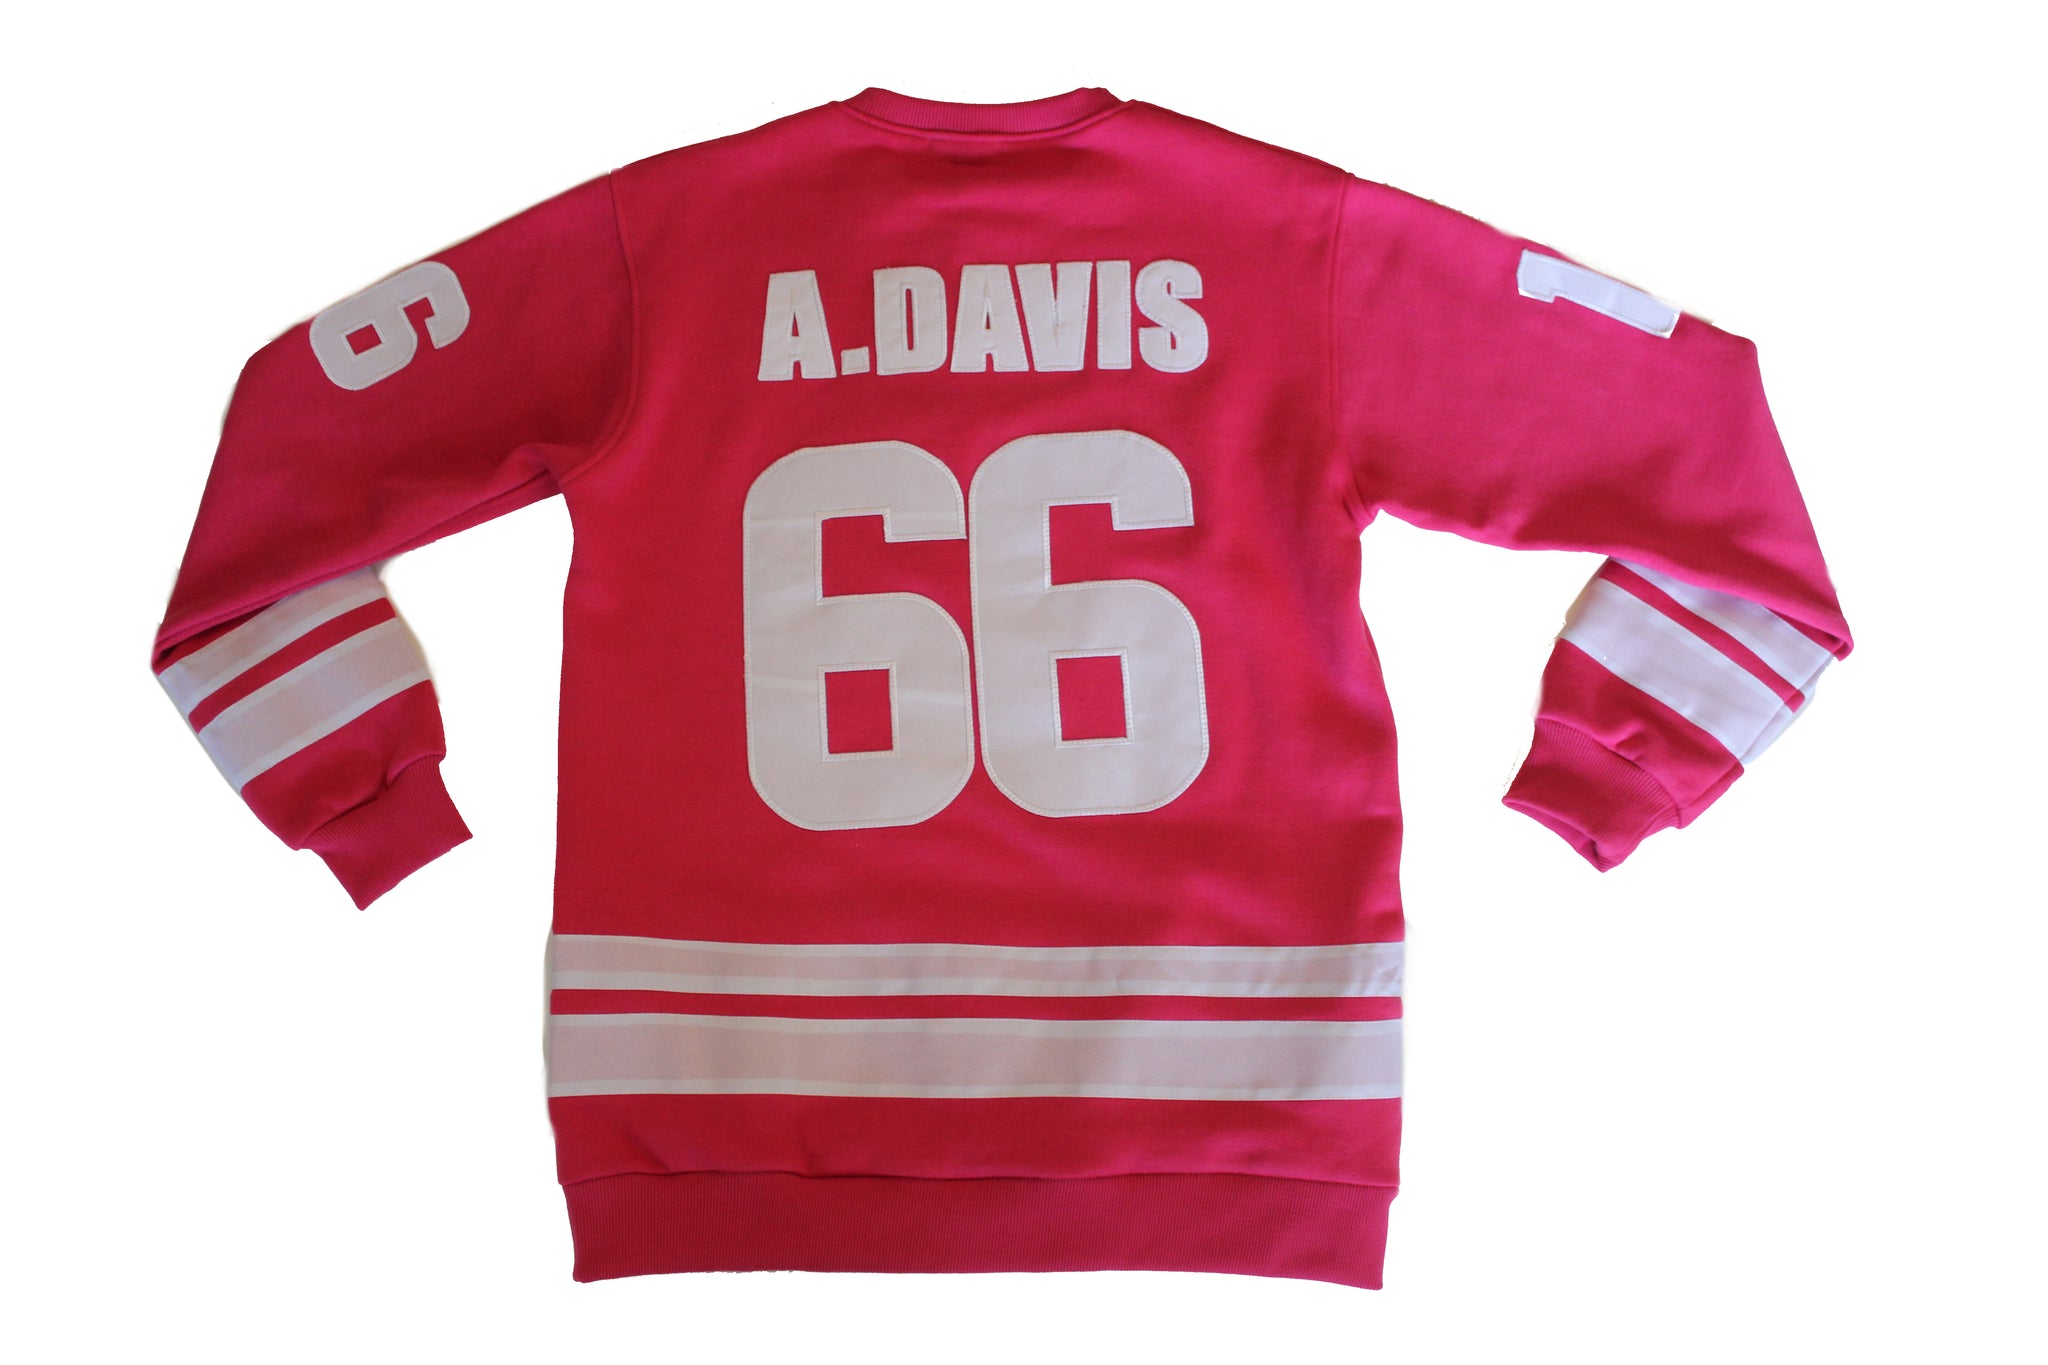 Black Panther Hockey Sweatshirt in Pink Contrast (Men's Sizing)